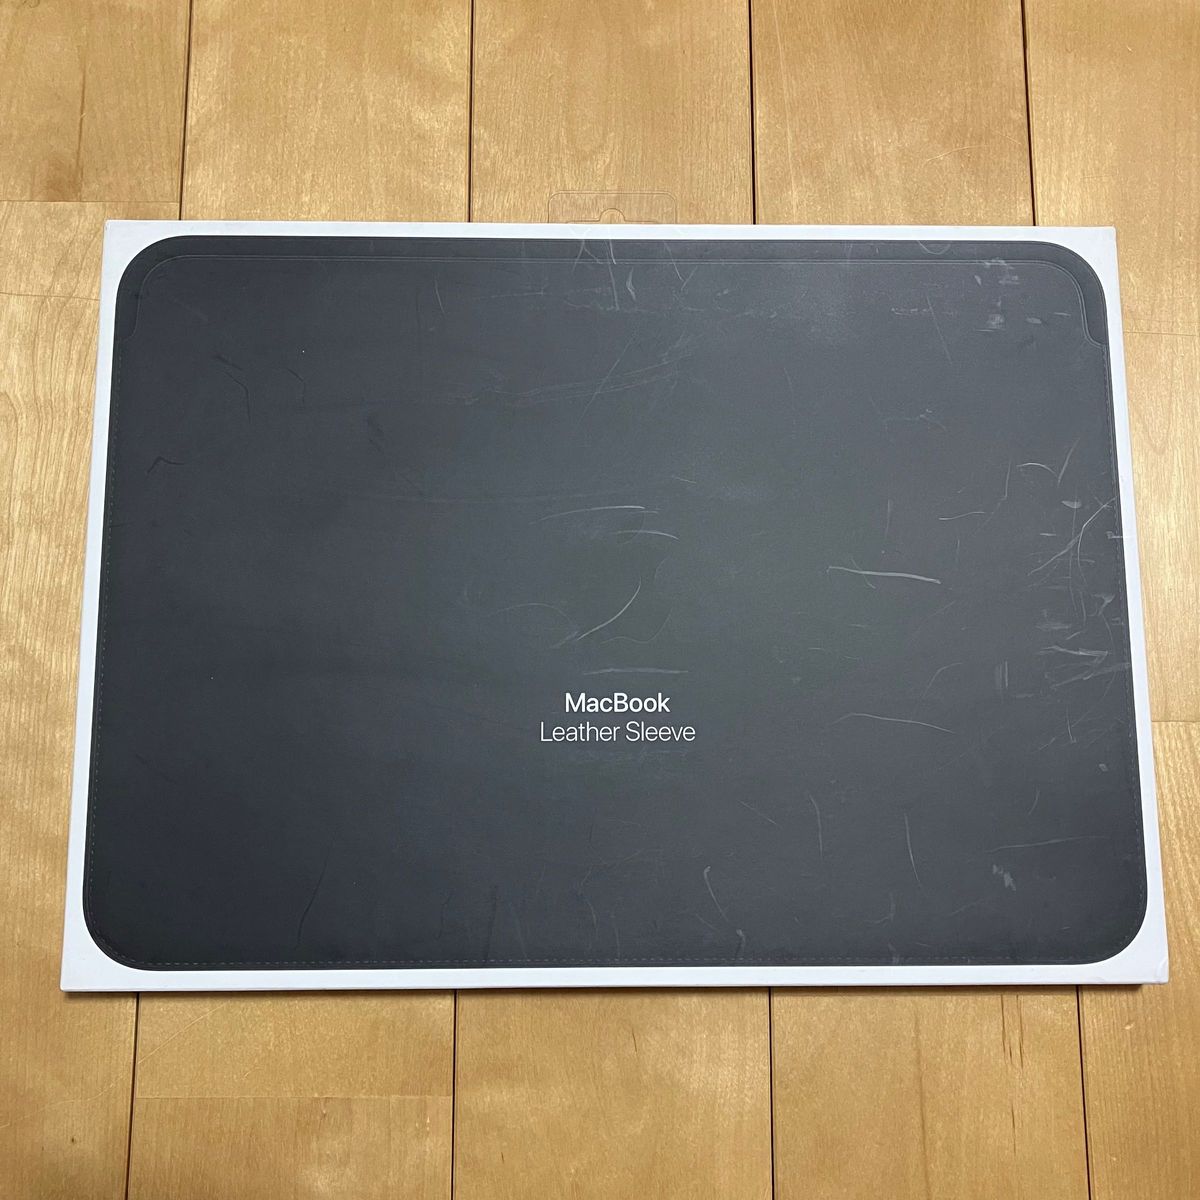 Apple MacBook 12-inch Leather Sleeve レザースリーブ ブラック MTEG2FE/A 未使用